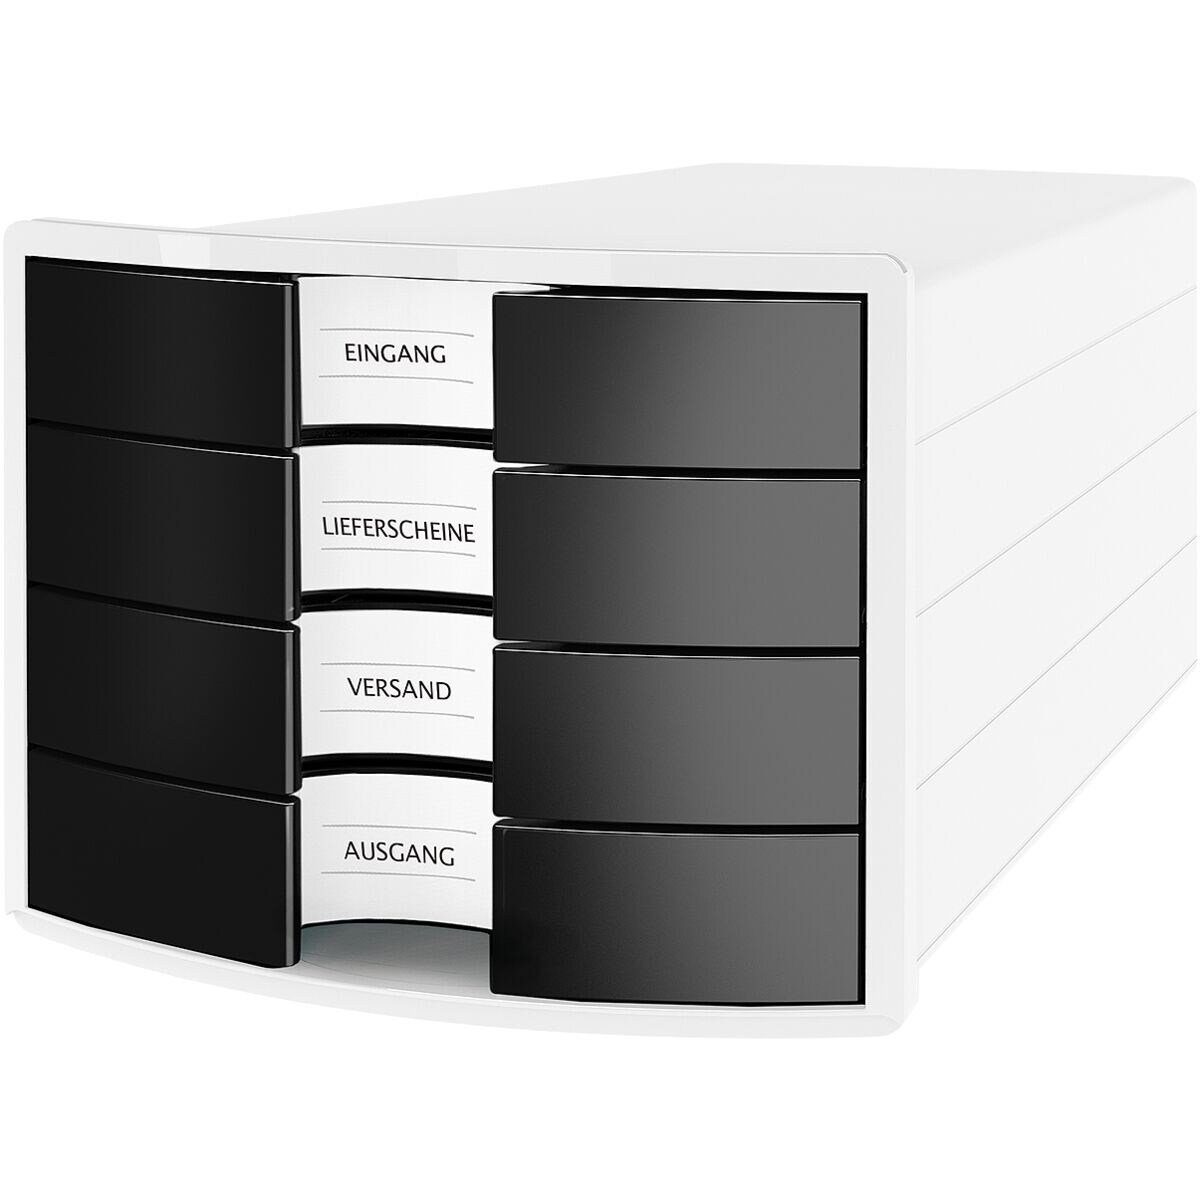 HAN Schubladenbox Impuls, mit 4 Schubladen, geschlossen, stapelbar schwarz/weiß | Schubladenboxen